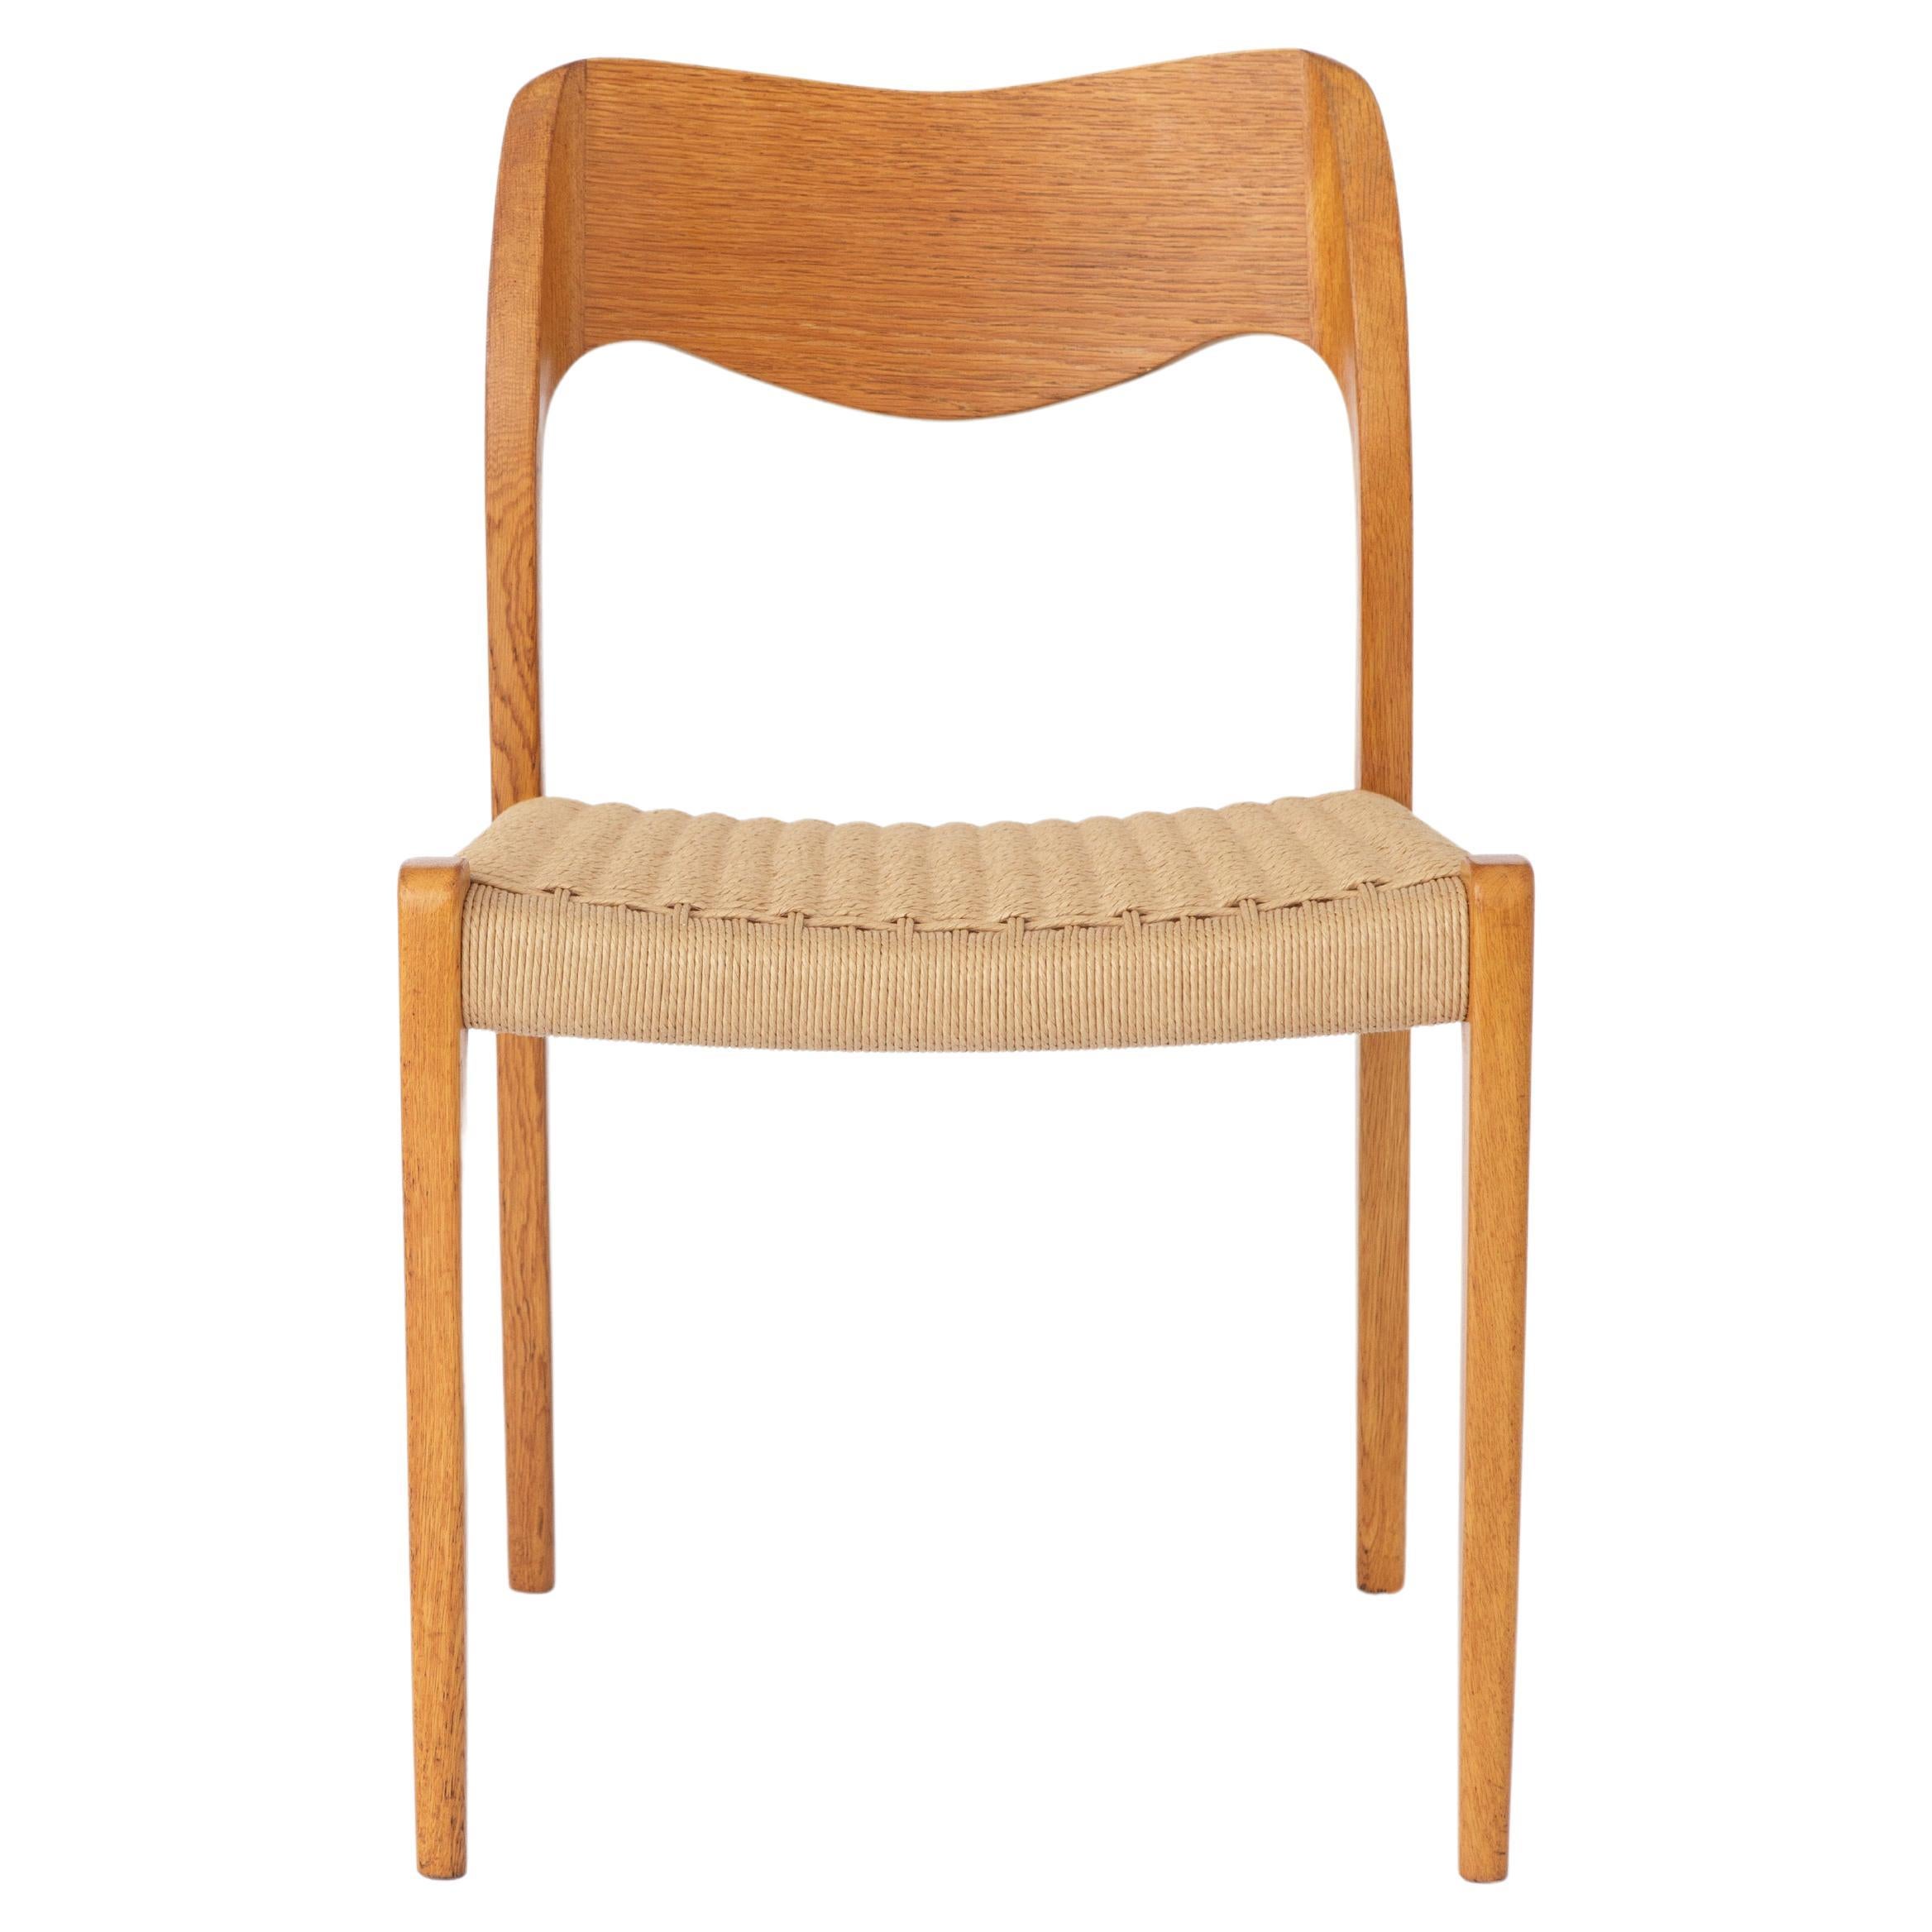 1 of 3 Niels Moller Chair, model 71 Oak, 1950s Vintage Danish For Sale